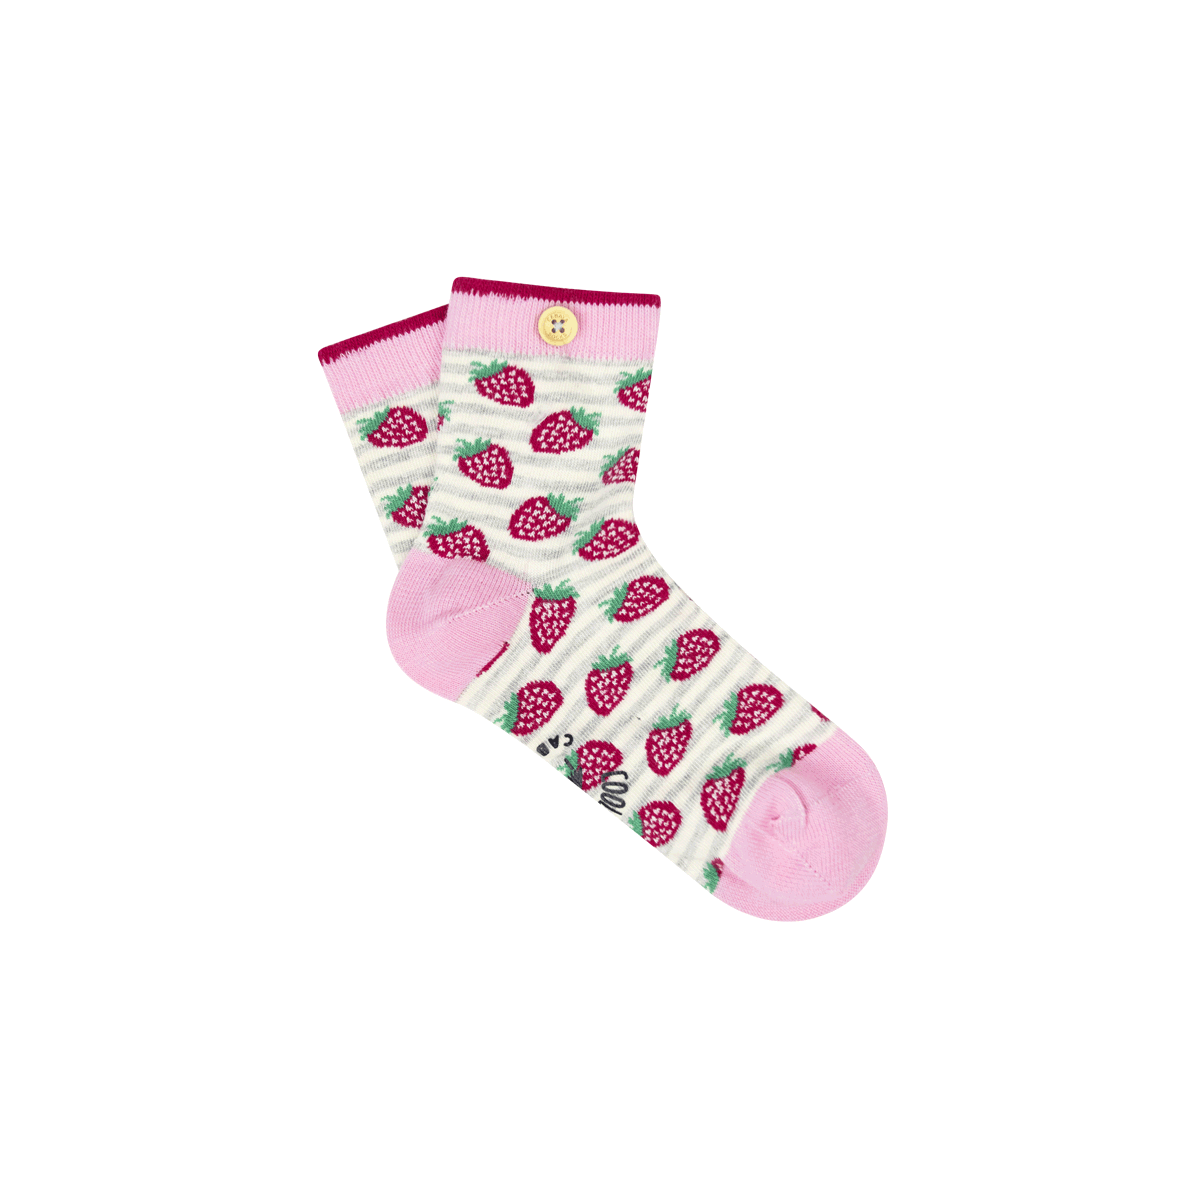 unlosable-socks-wood-button-kids-sockkids20-luna